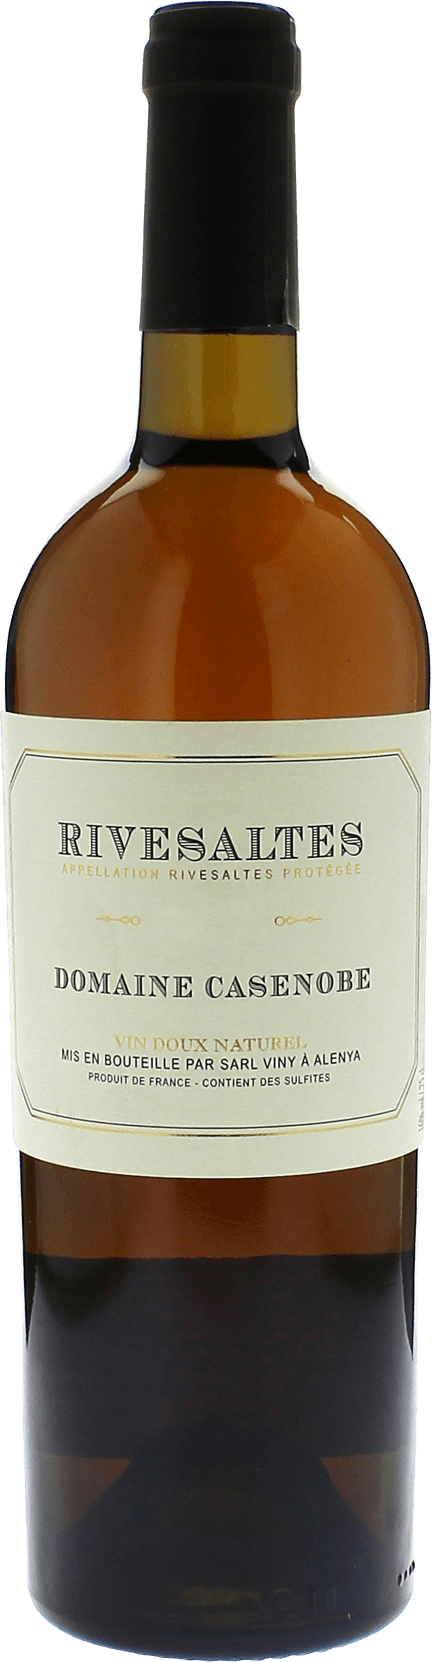 Domaine casenobe rivesaltes 1977 Vin doux naturel Rivesaltes, Vin doux naturel